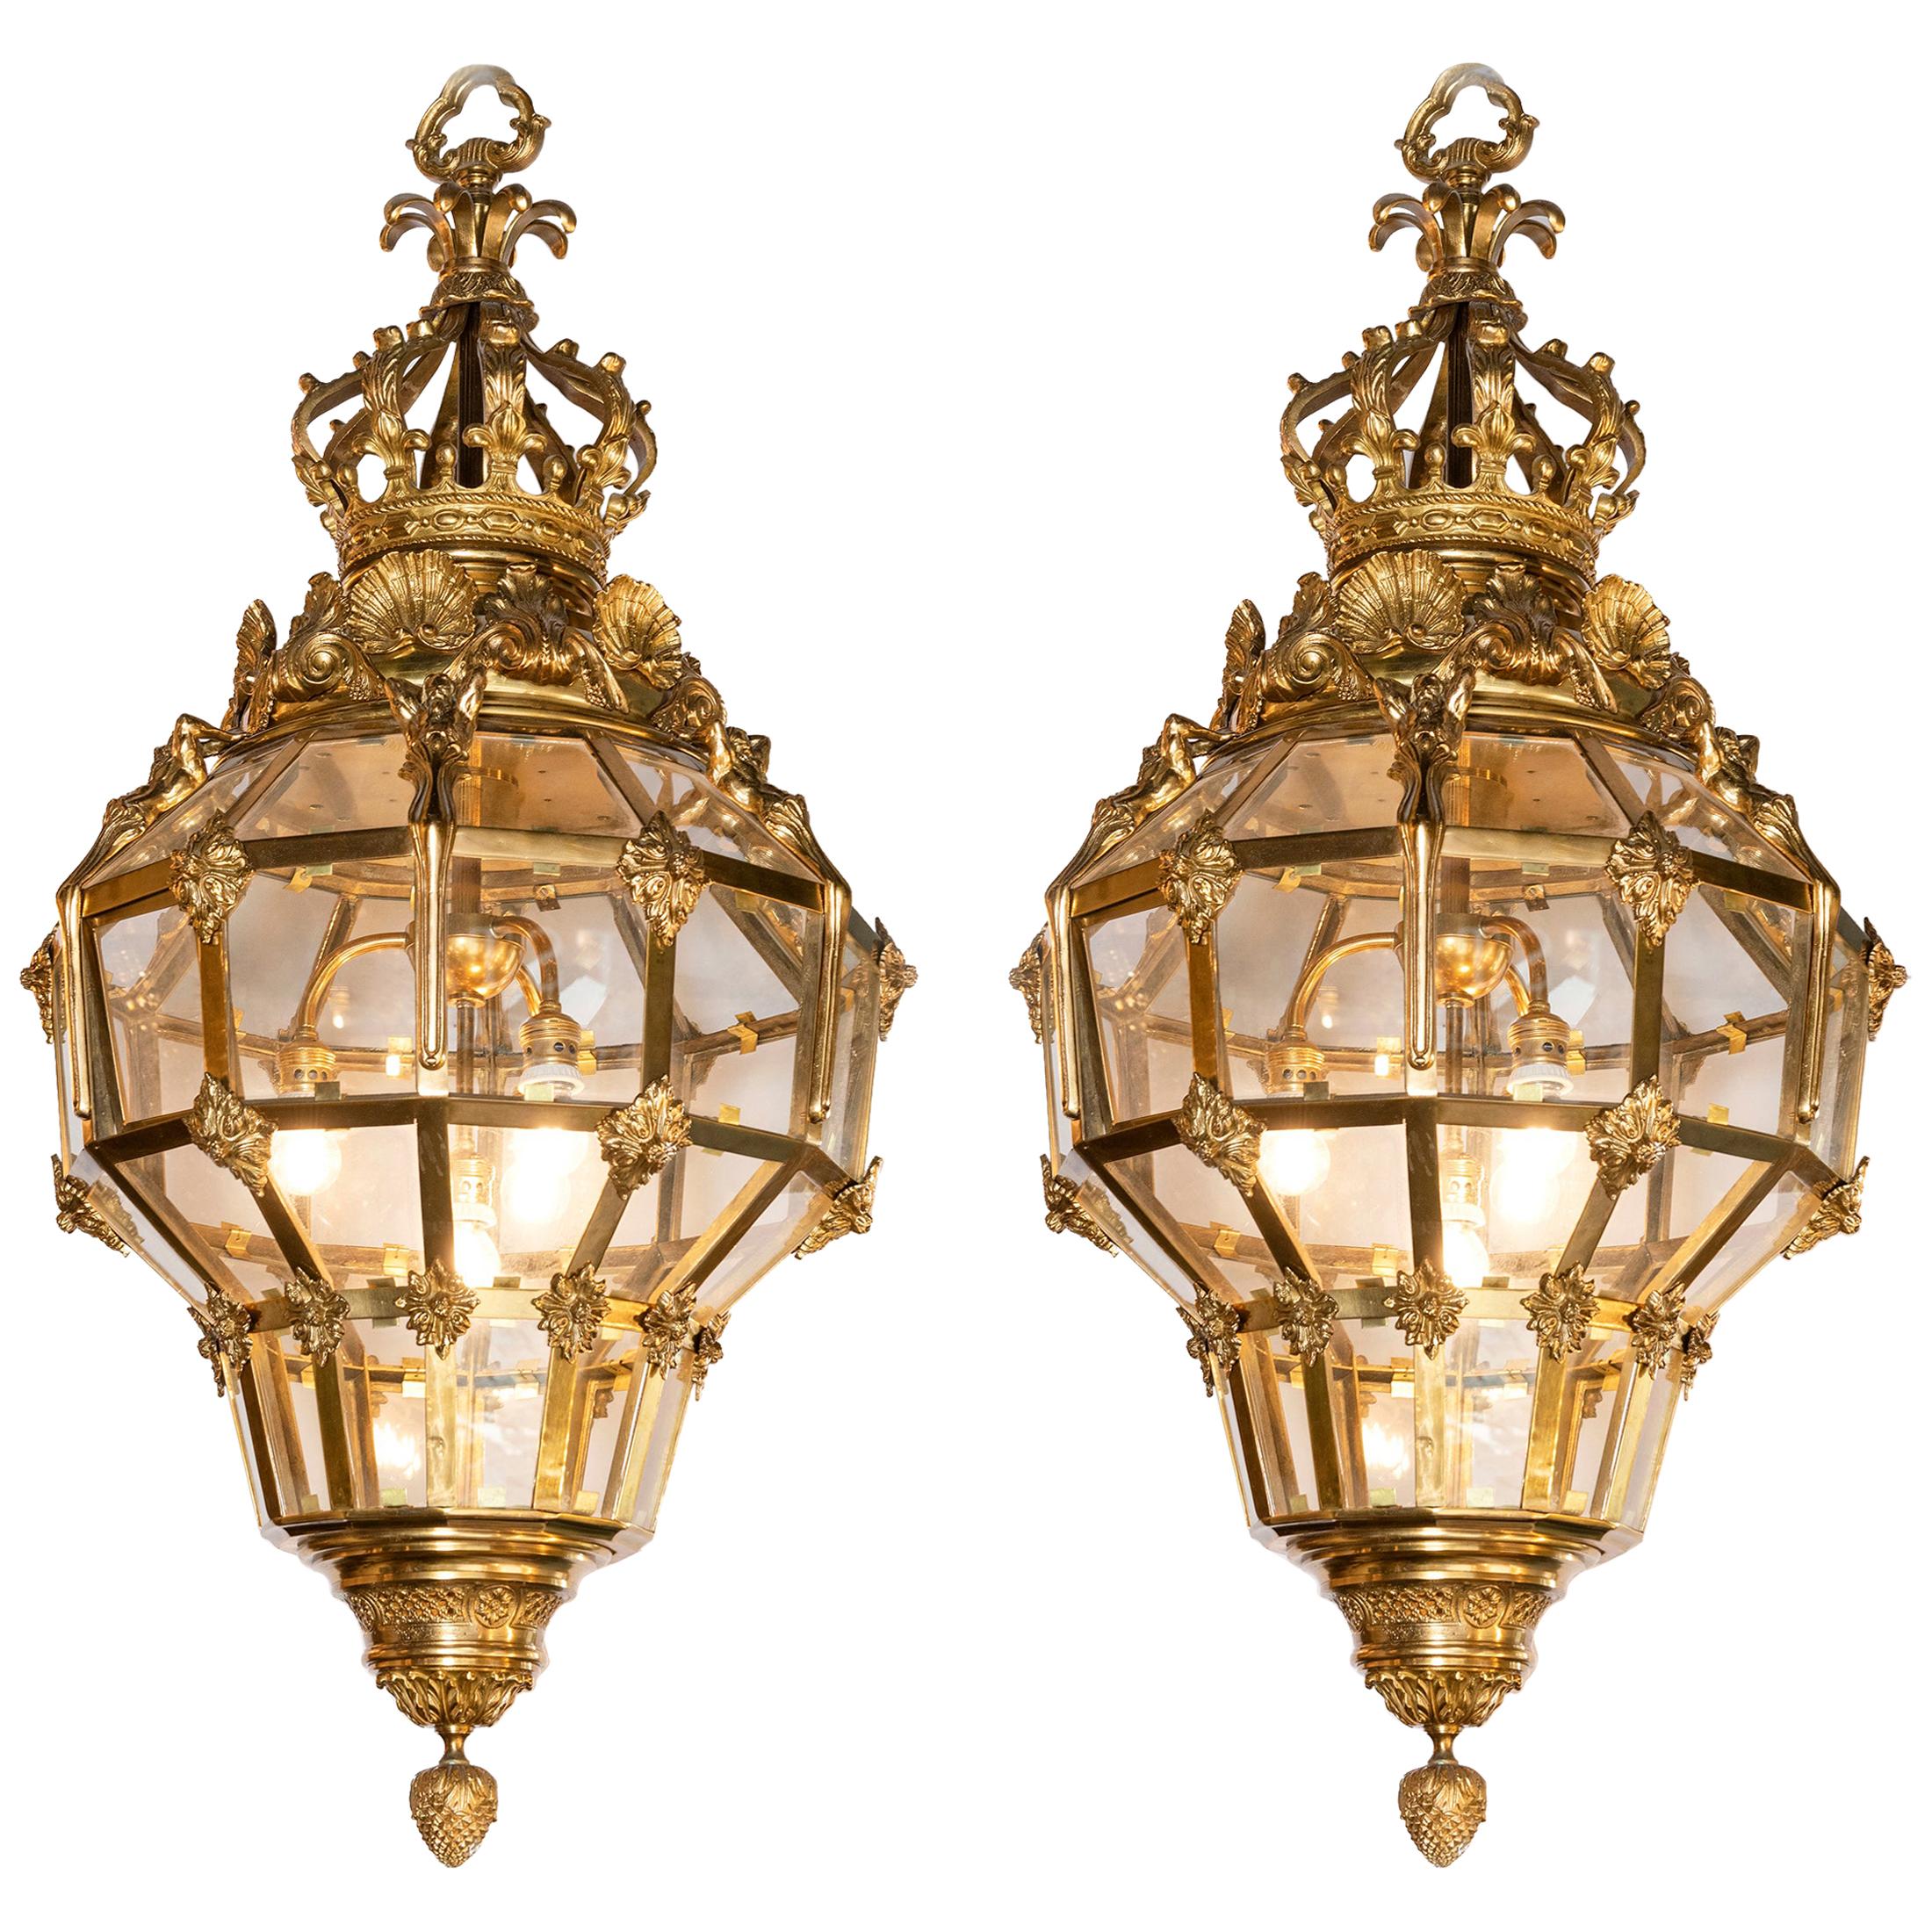 Pair of Gilt Bronze Lanterns, France, Late 19th Century